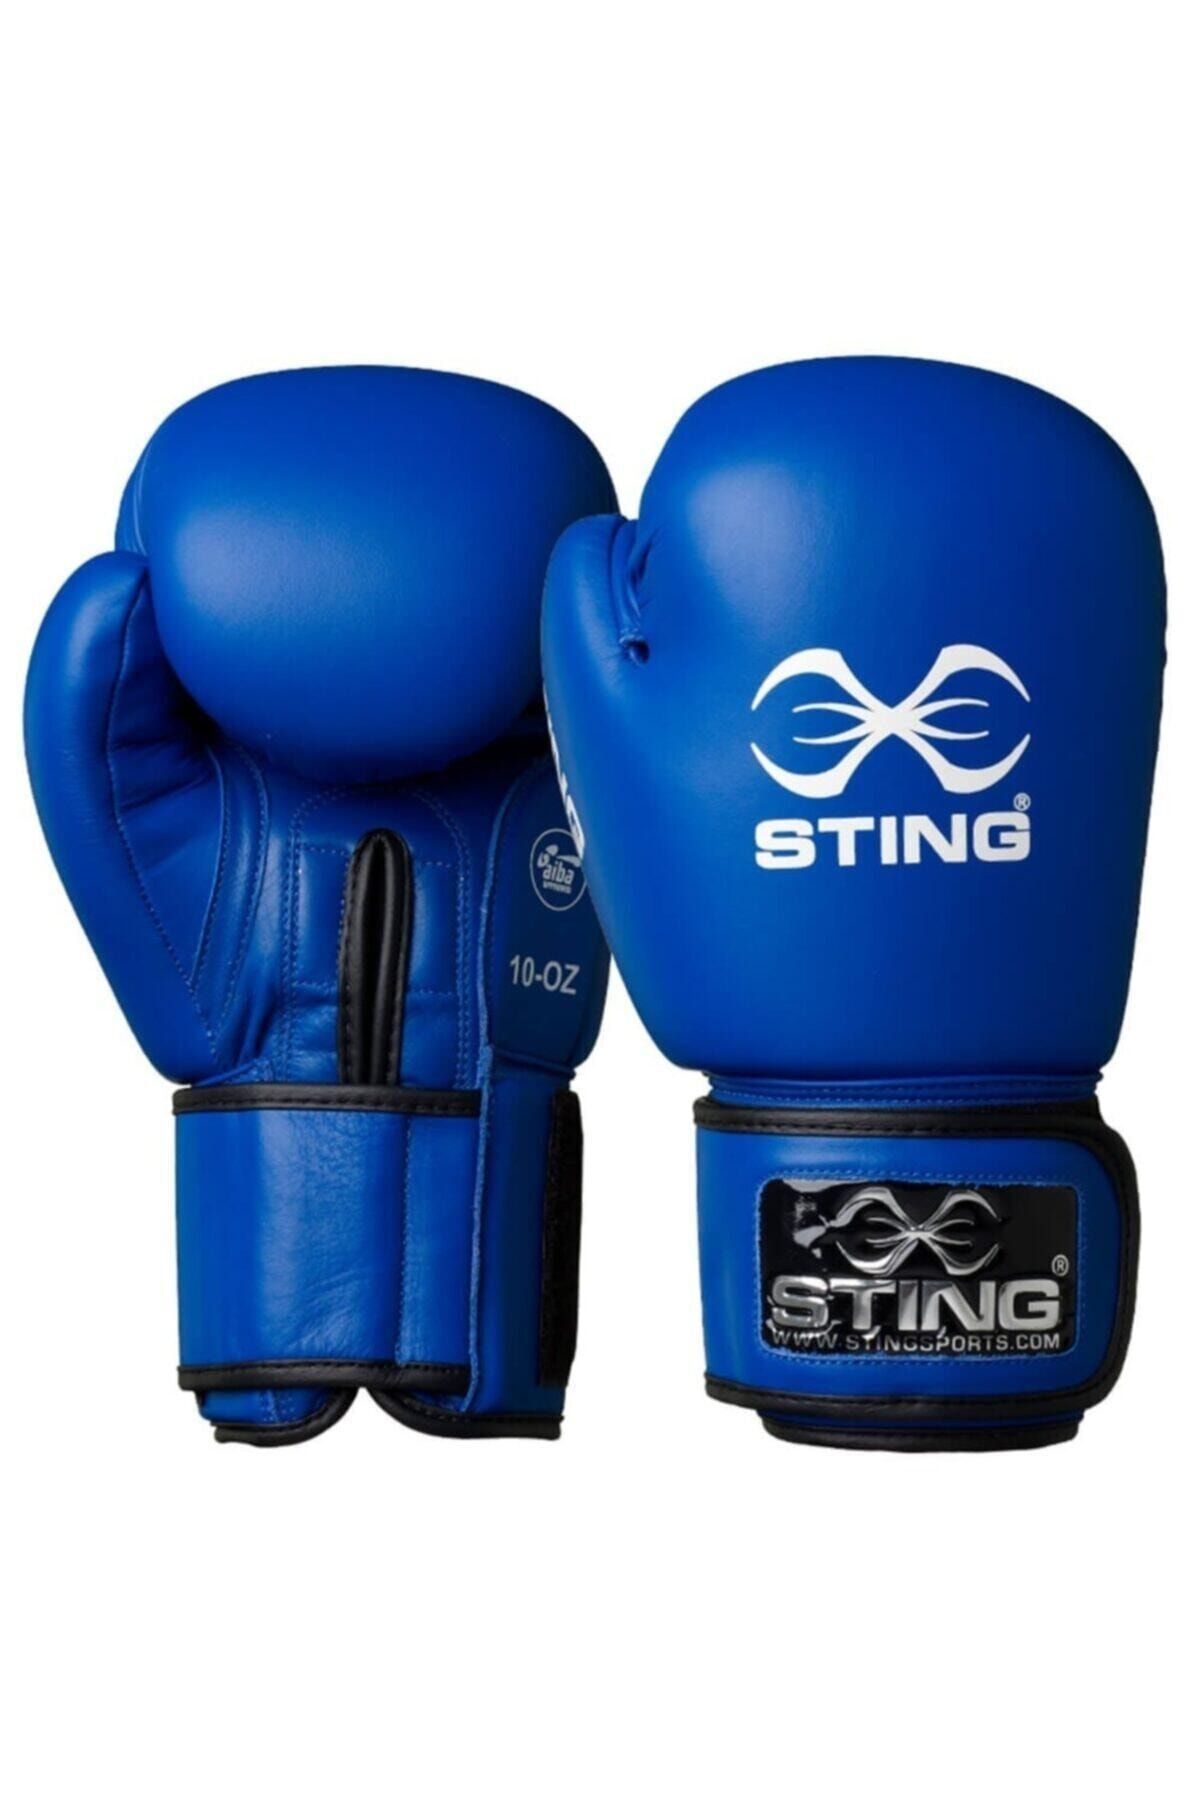 Far box. Боксерские перчатки АИБА. Boxing Gloves Aiba. Боксерские перчатки adidas Aiba. Sting Boxer.